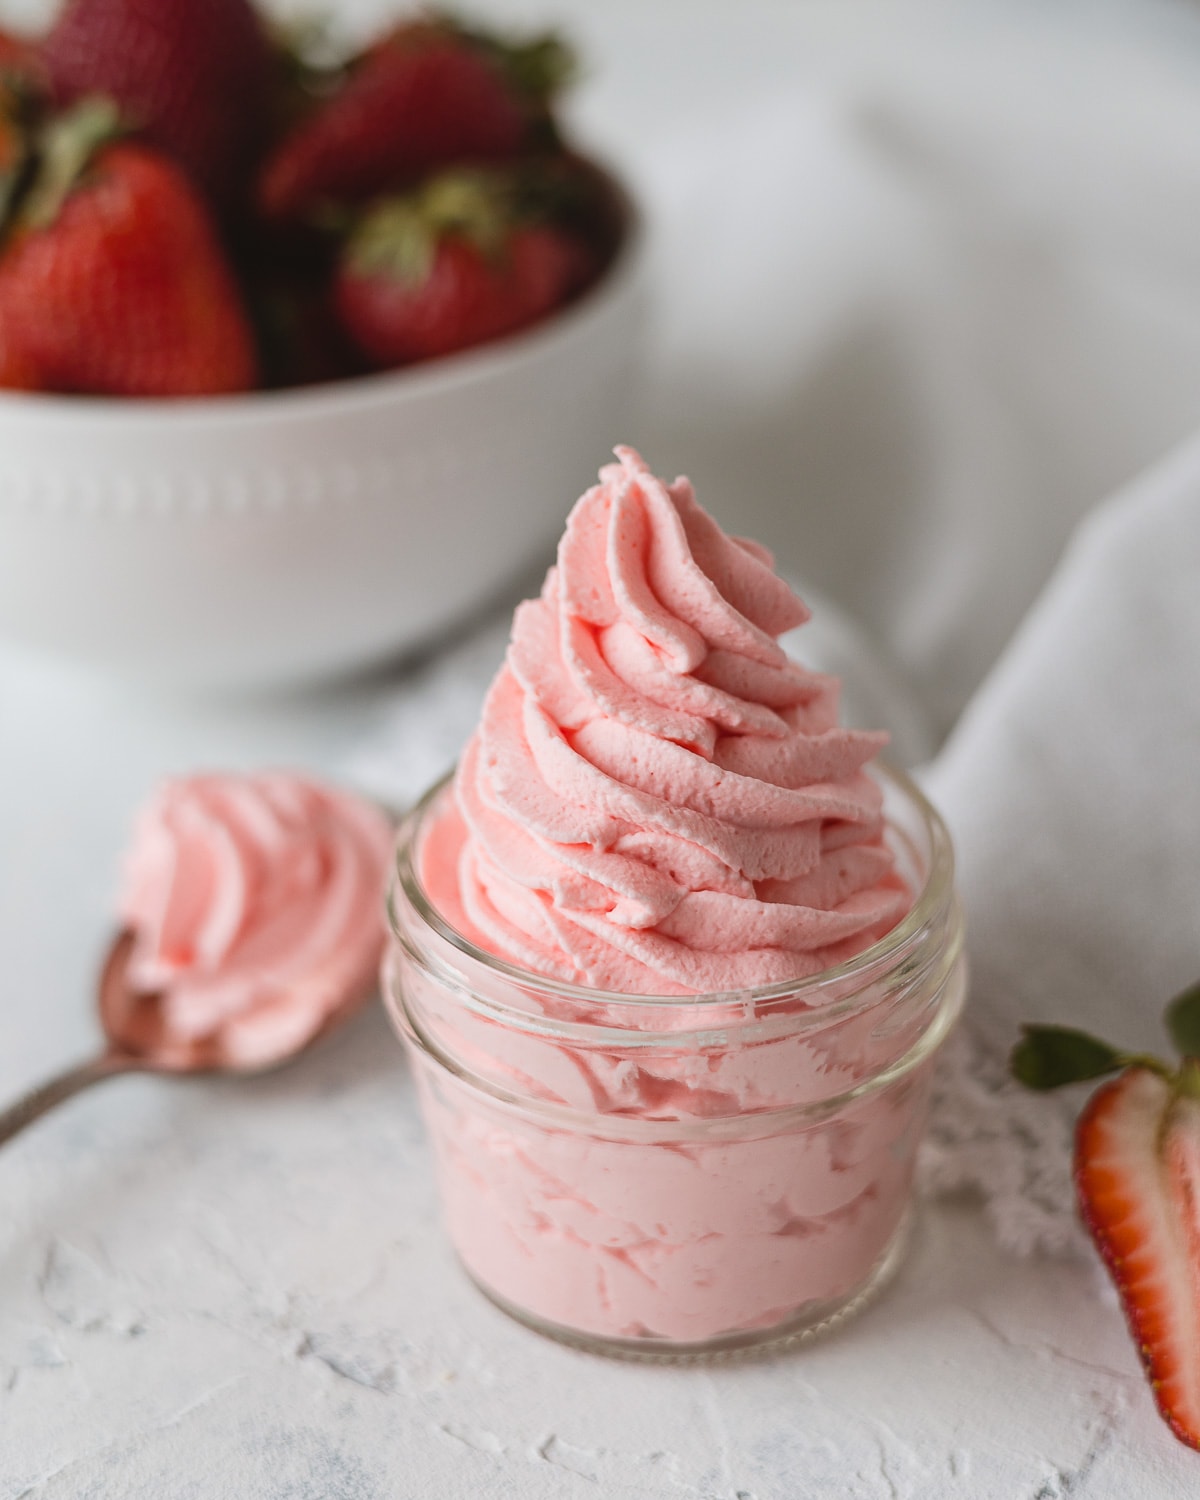 Strawberry Whipped Cream